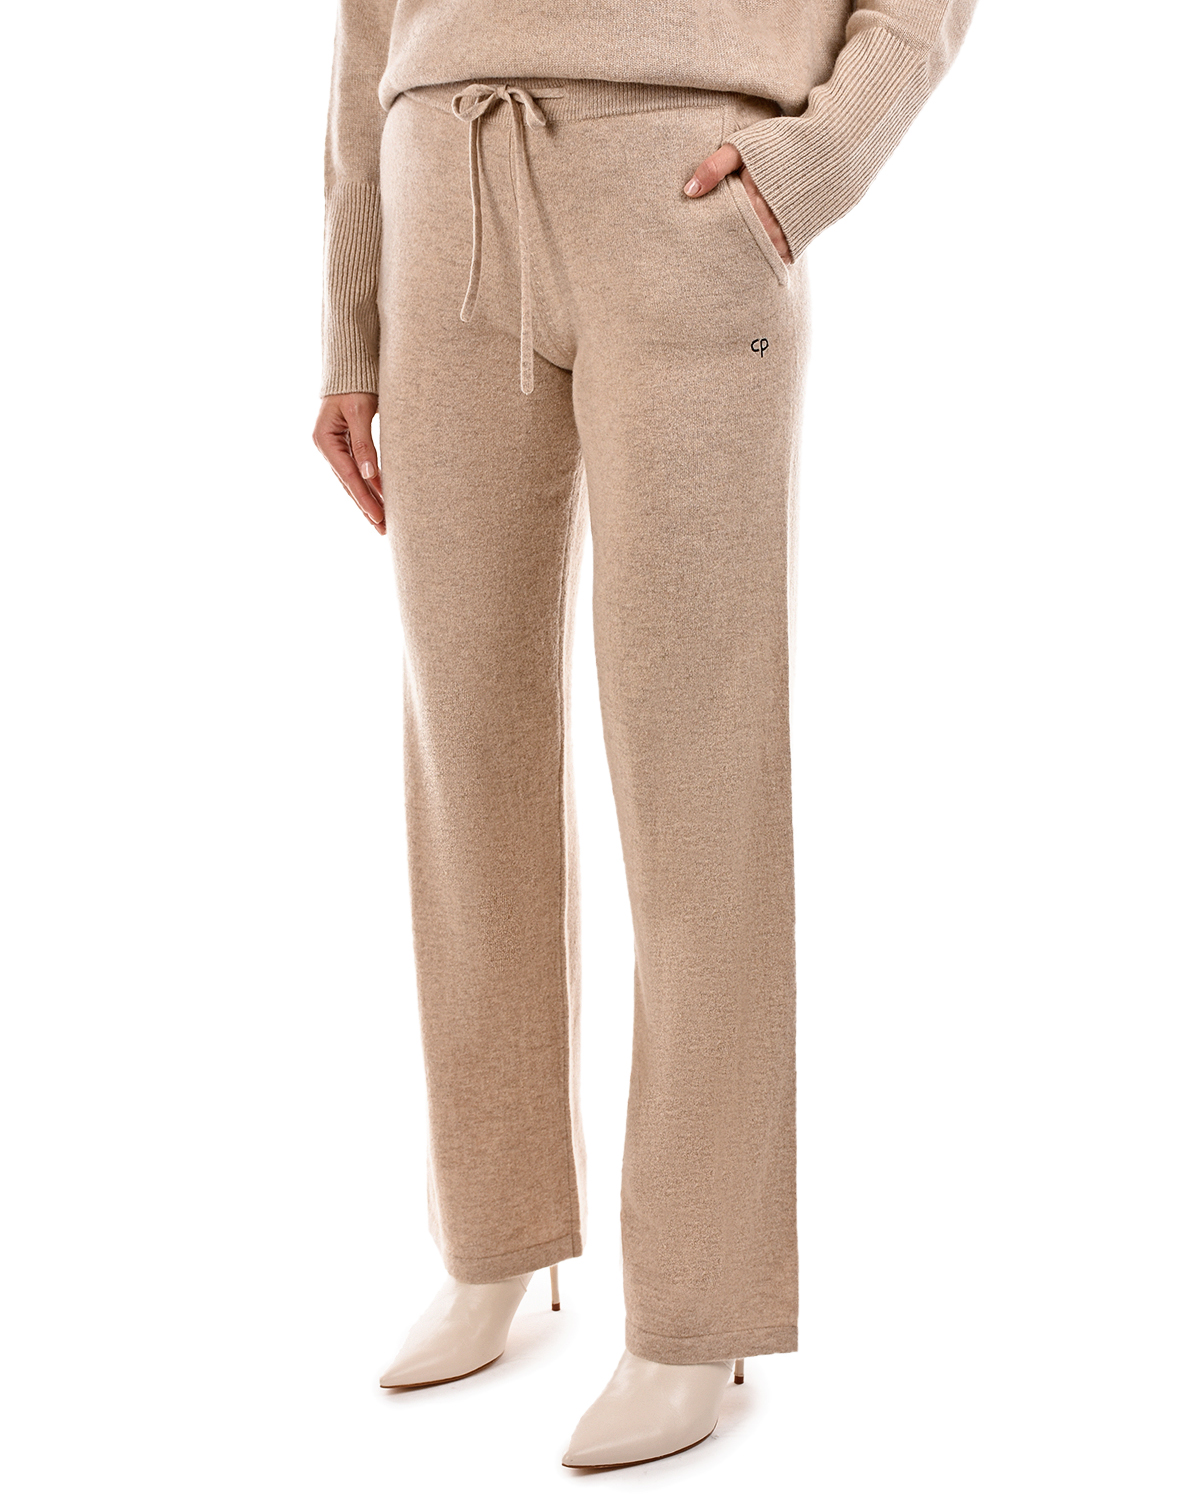 Бежевые брюки с поясом на кулиске Chinti&Parker, размер 38, цвет бежевый - фото 8